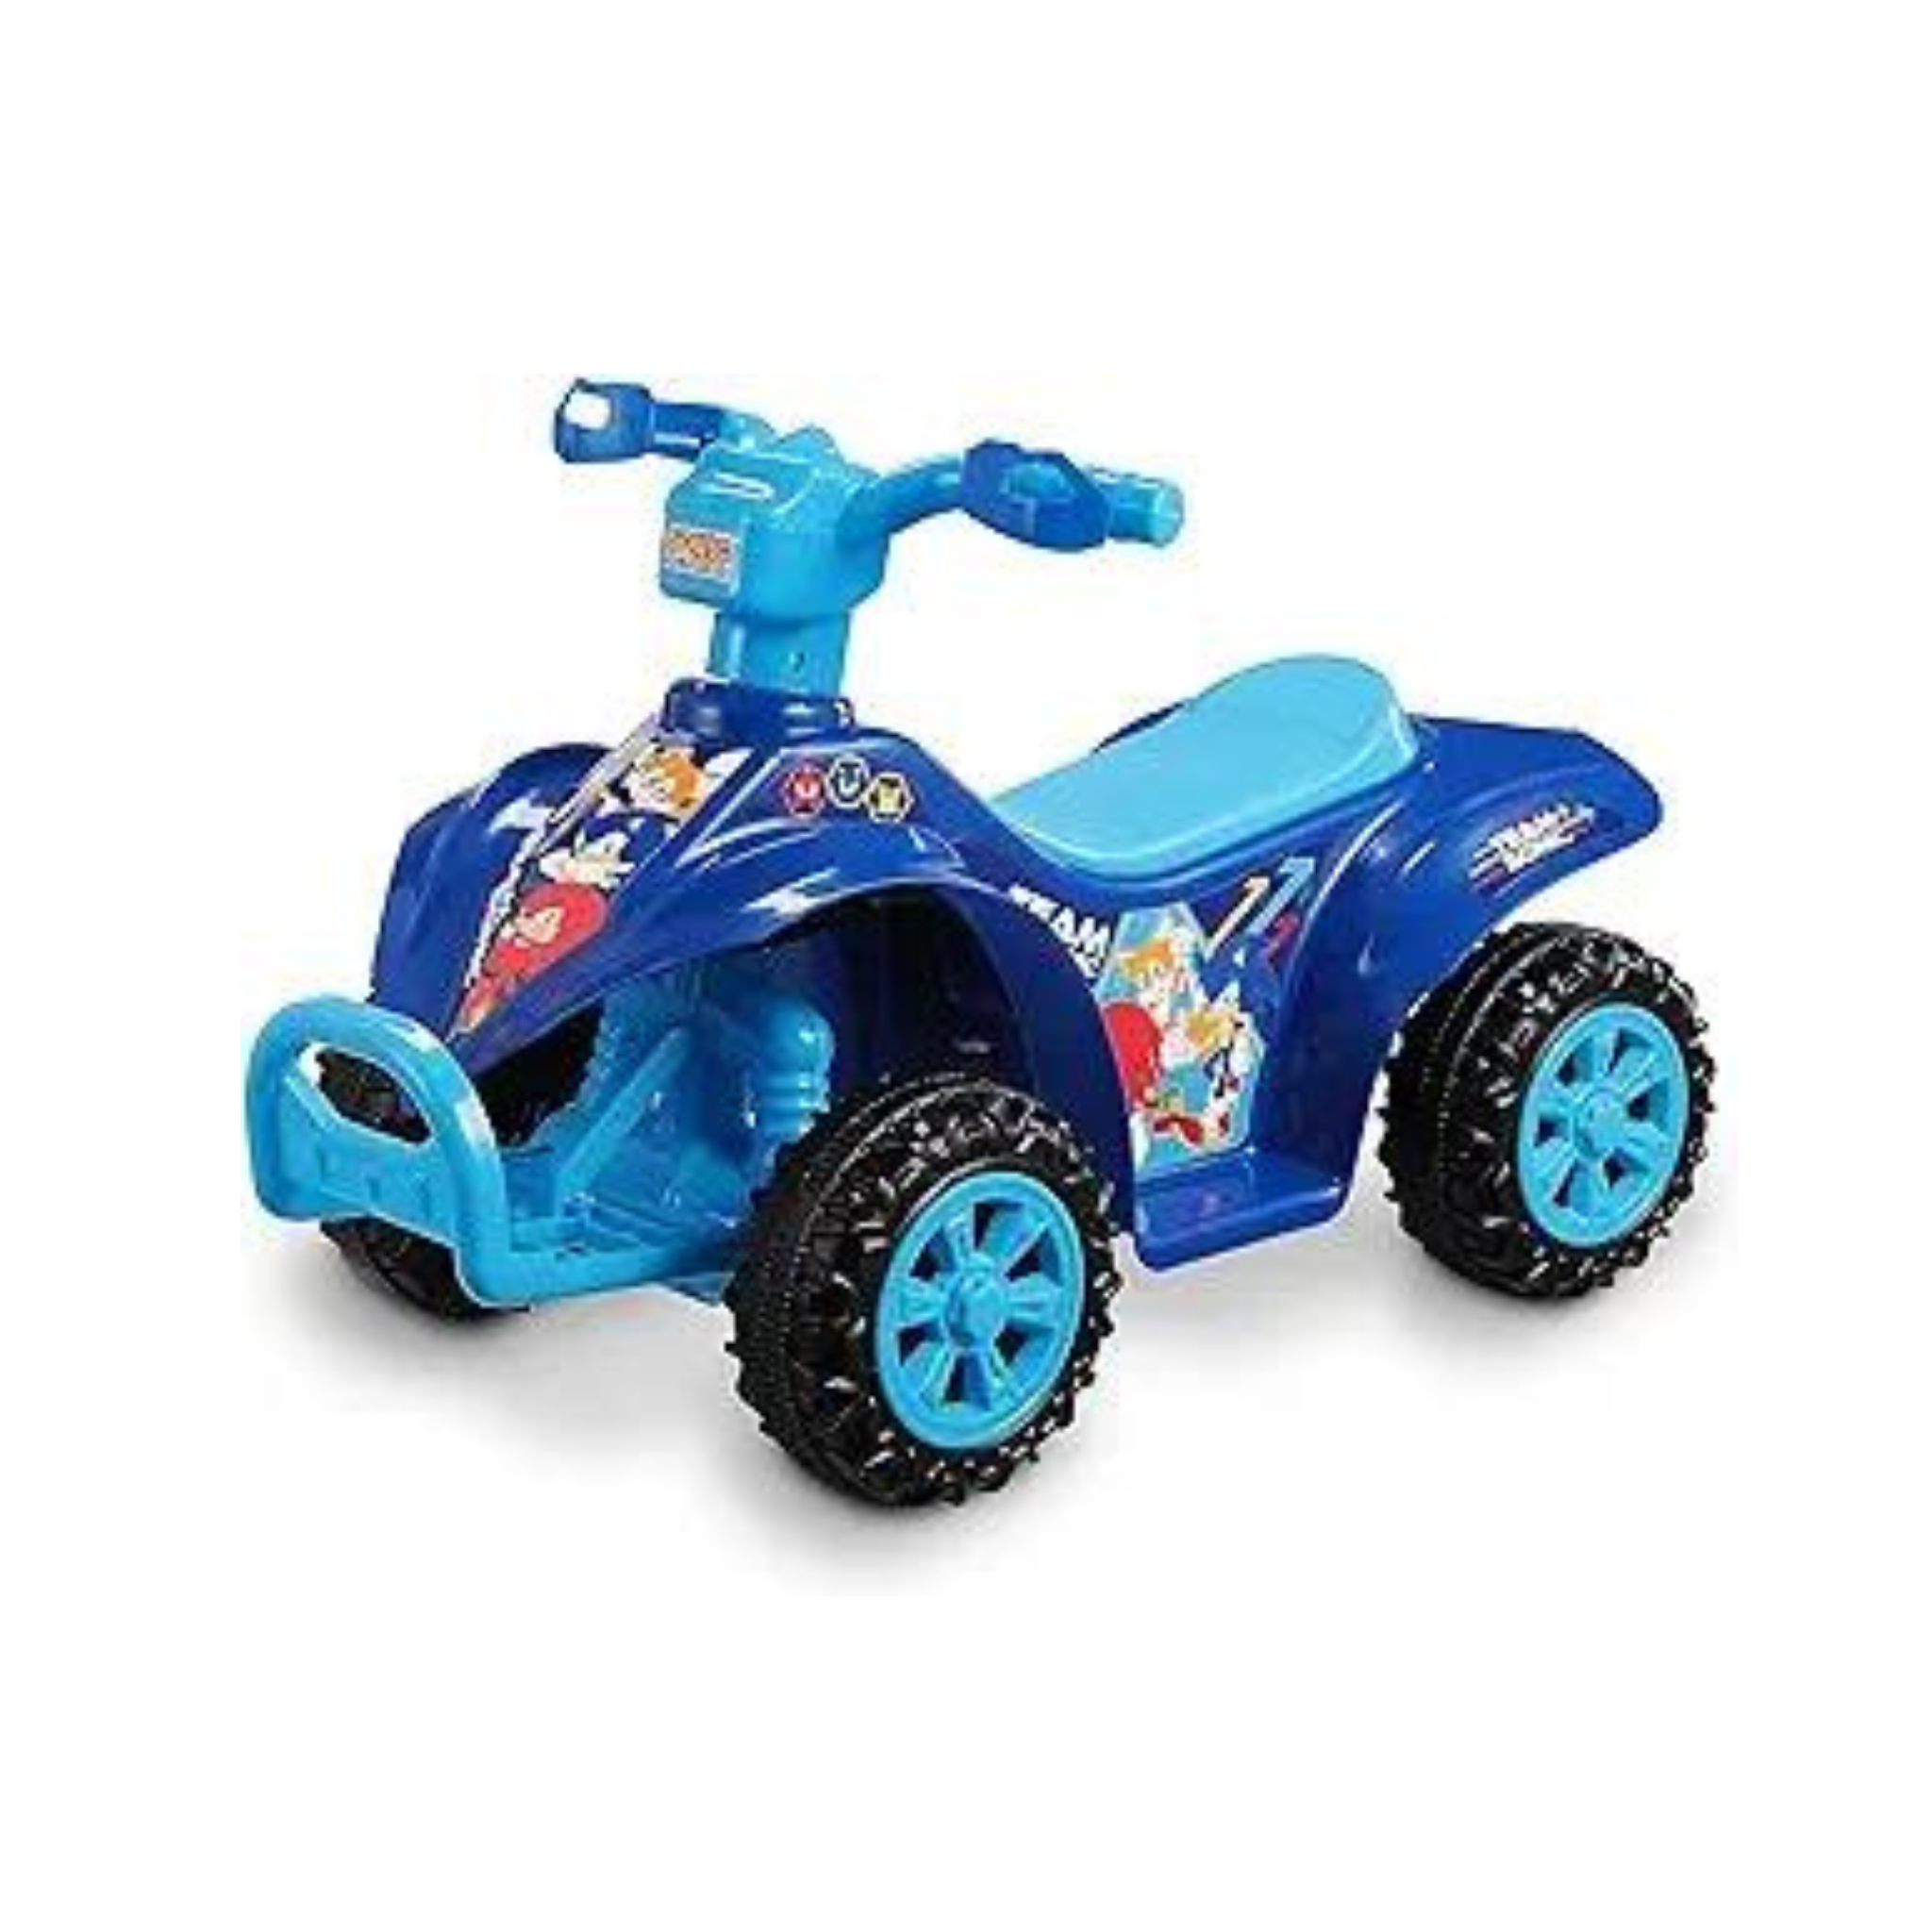 Sonic The Hedgehog 6V ATV Quad Ride-On Toy